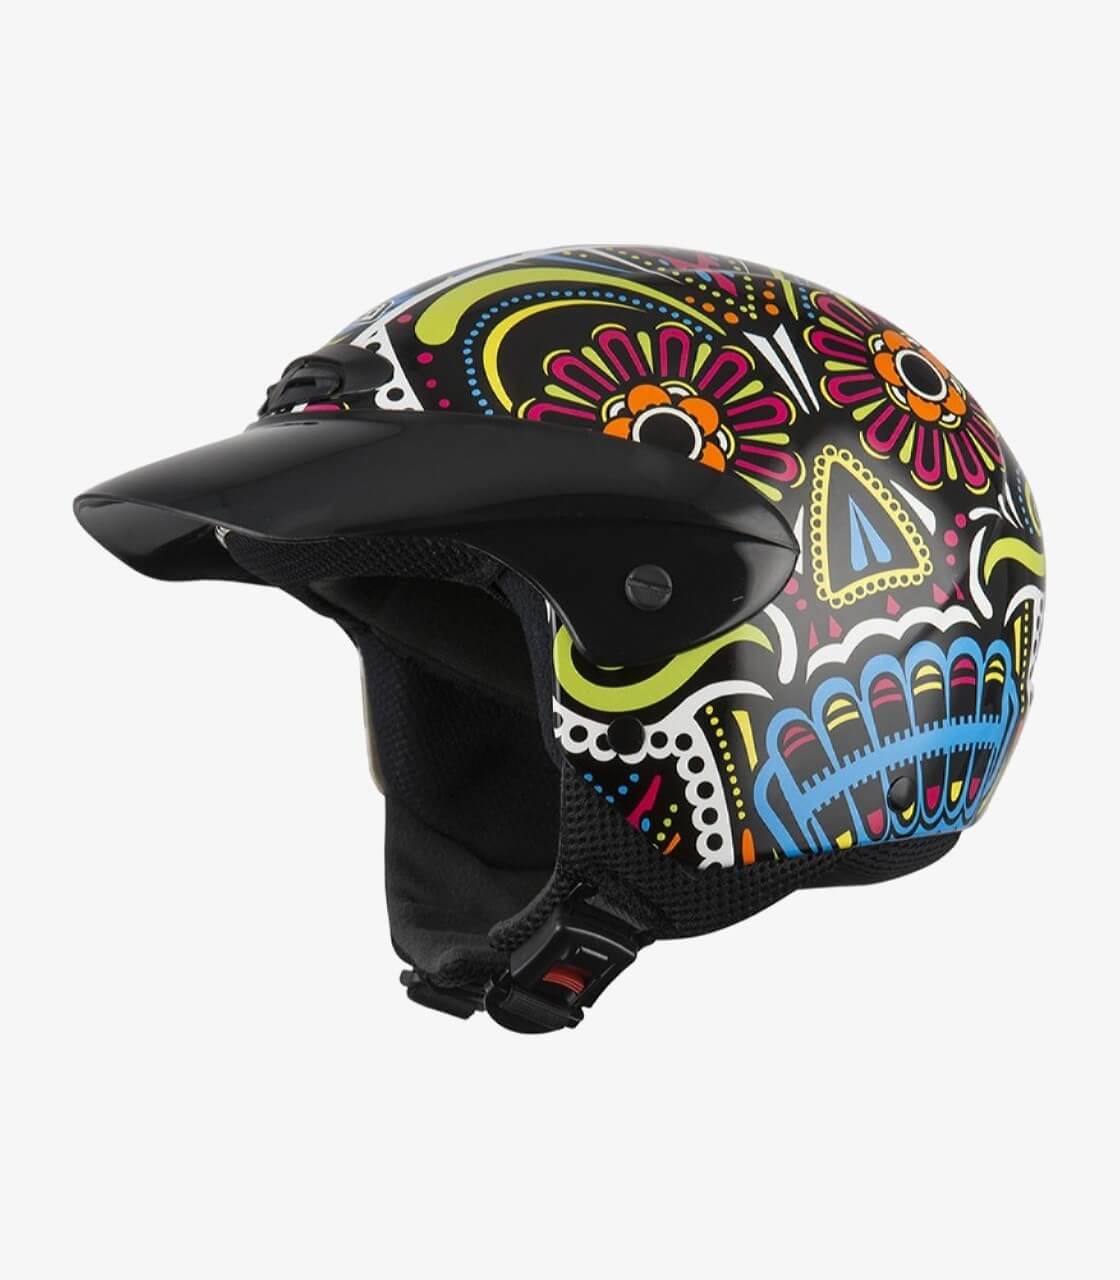 JR helmet design